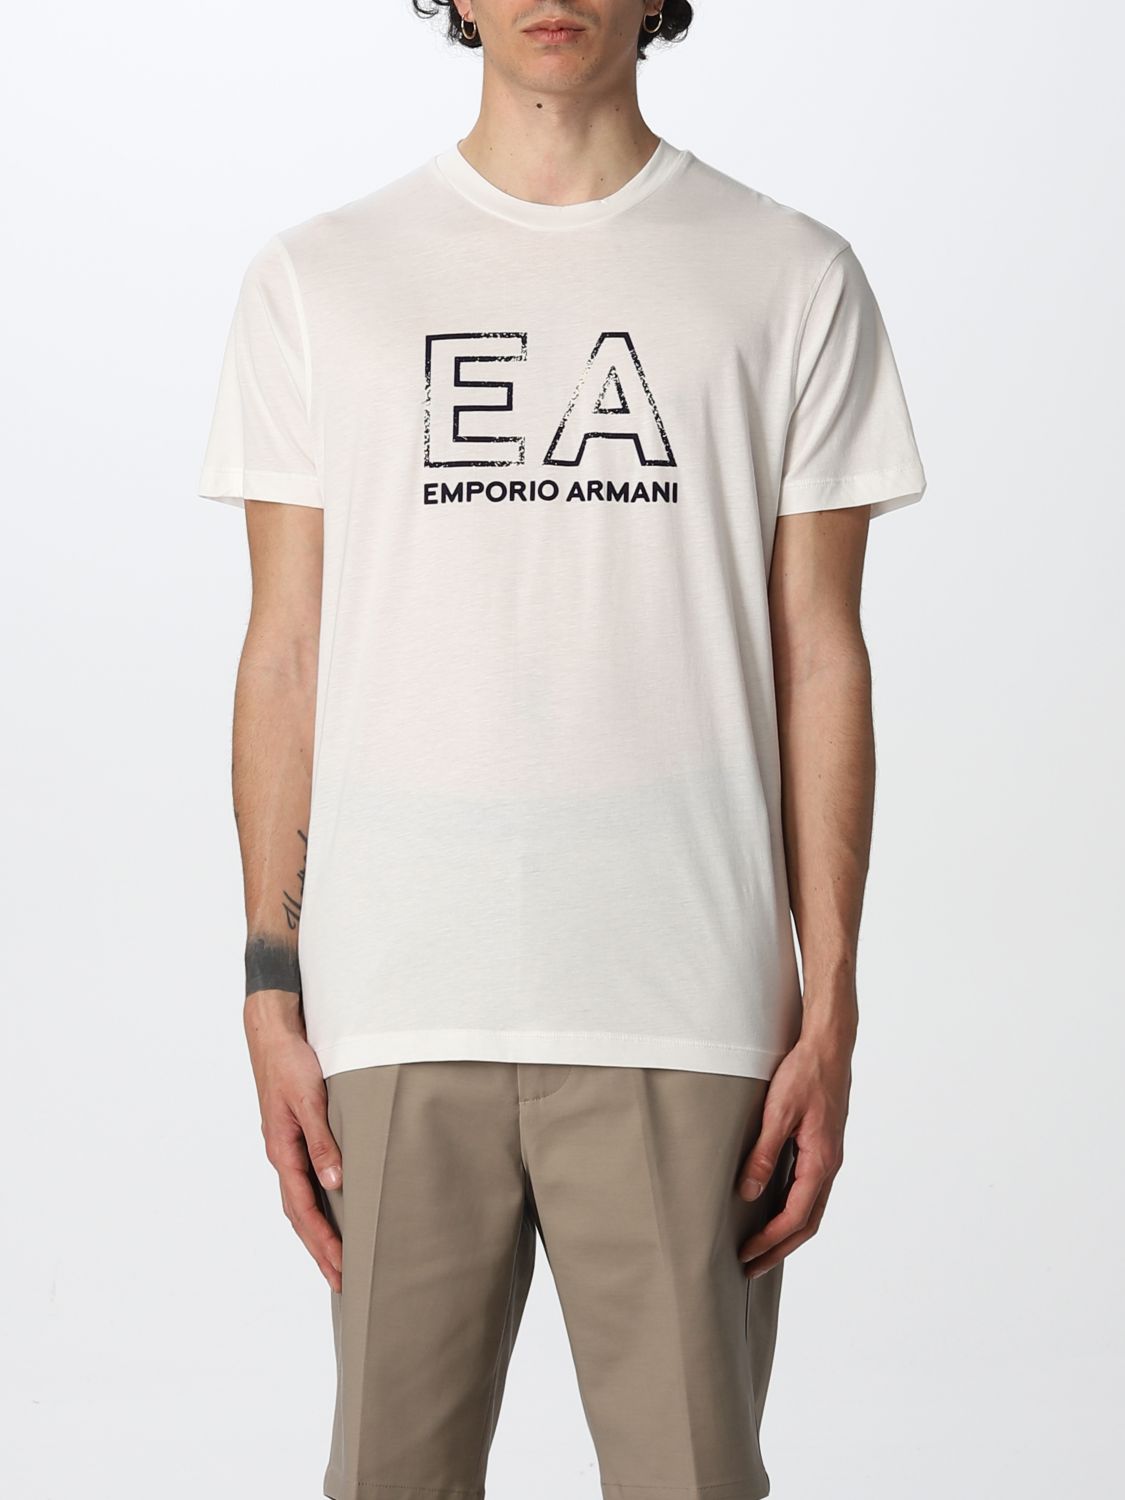 Emporio Armani cotton t-shirt with eagle